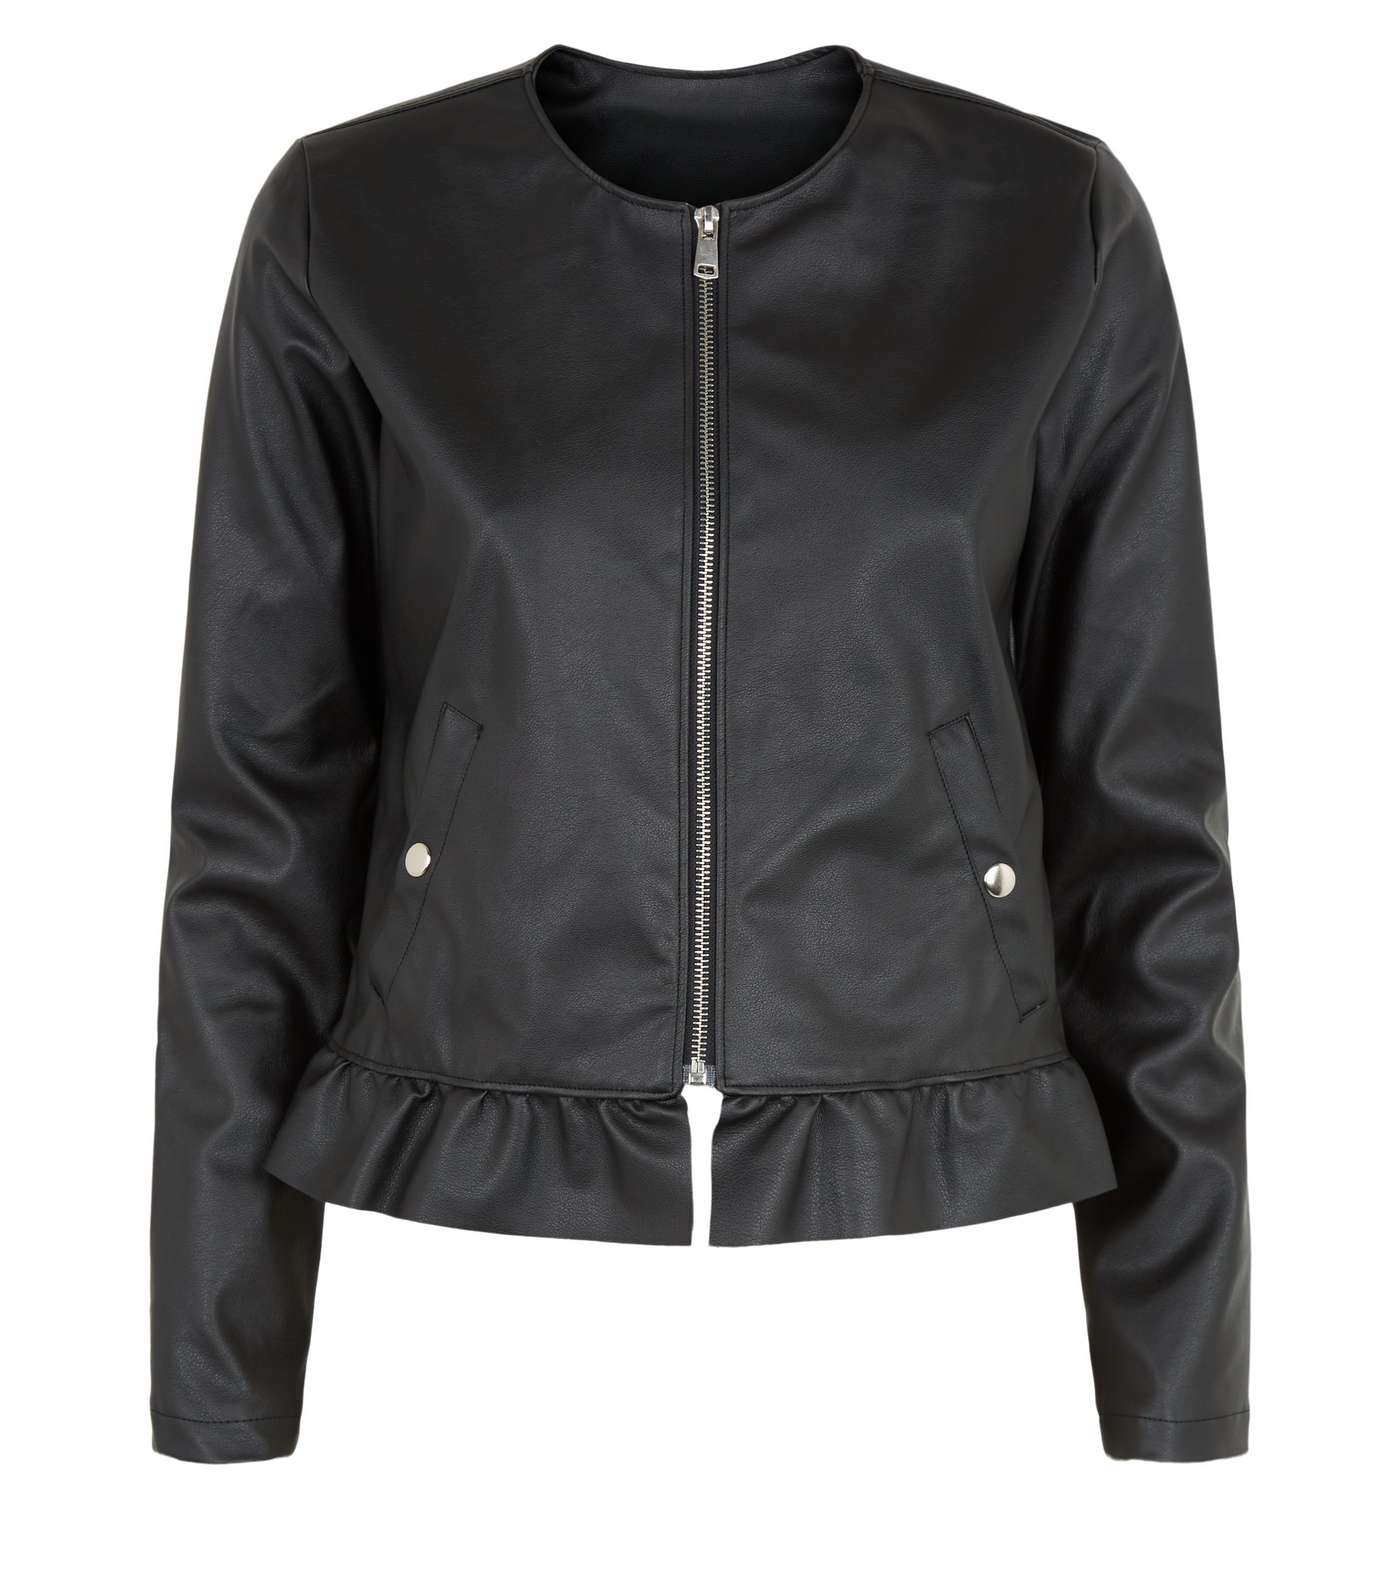 Urban Bliss Black Leather-Look Peplum Jacket Image 4